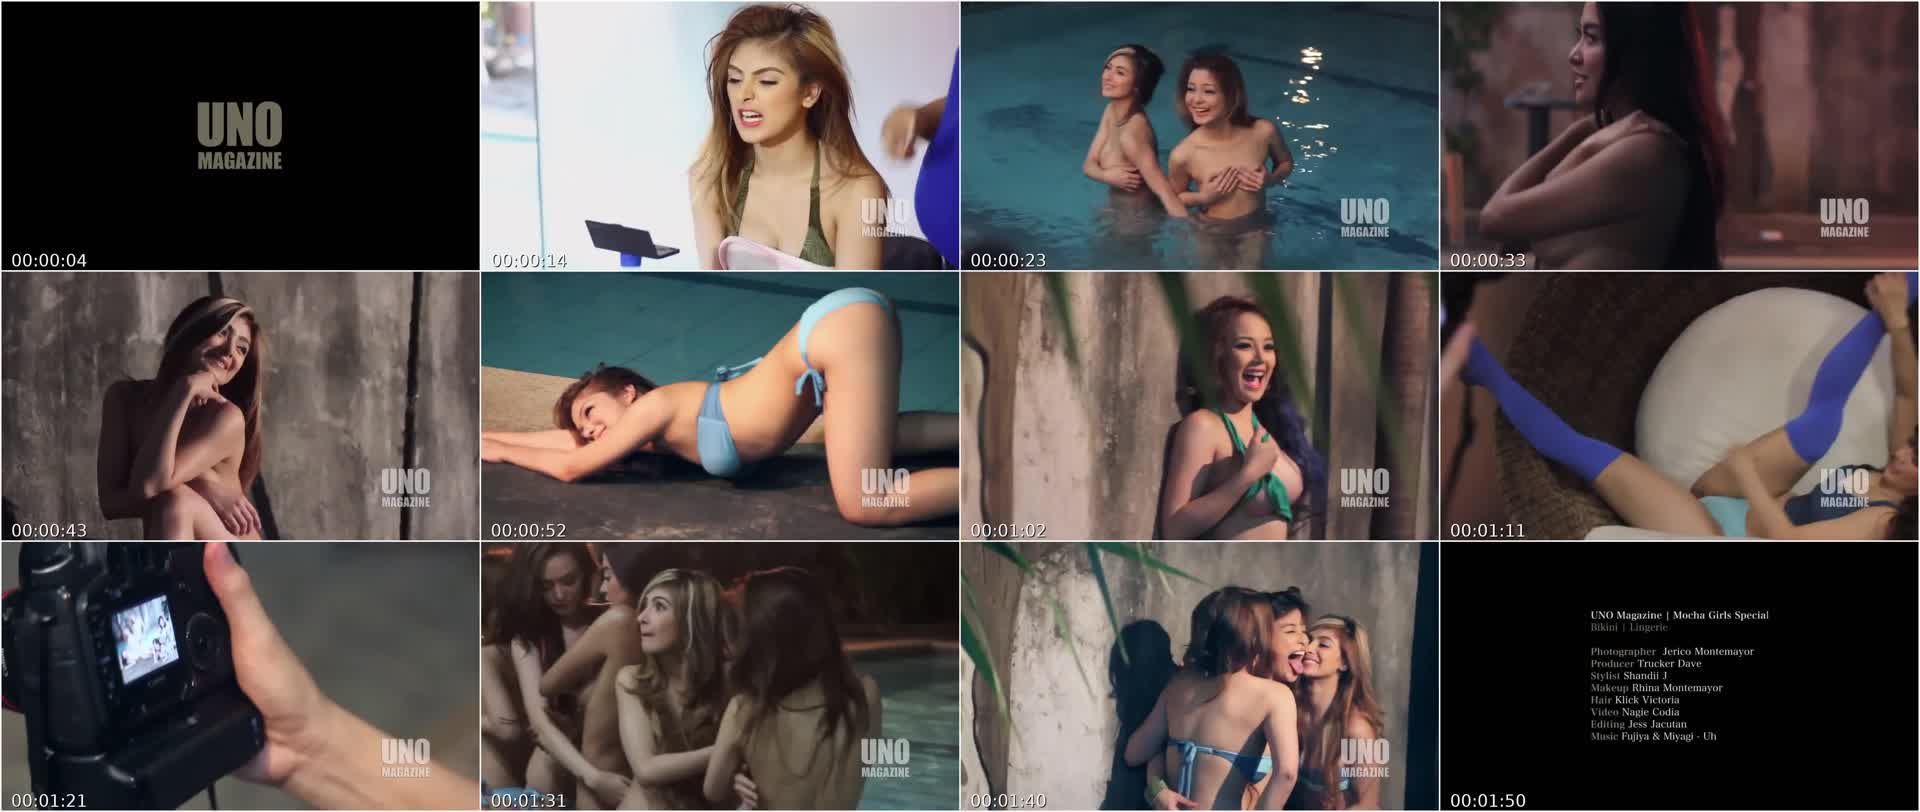 Mocha Girls on UNO Magazine Behind the Scene Leaked Video